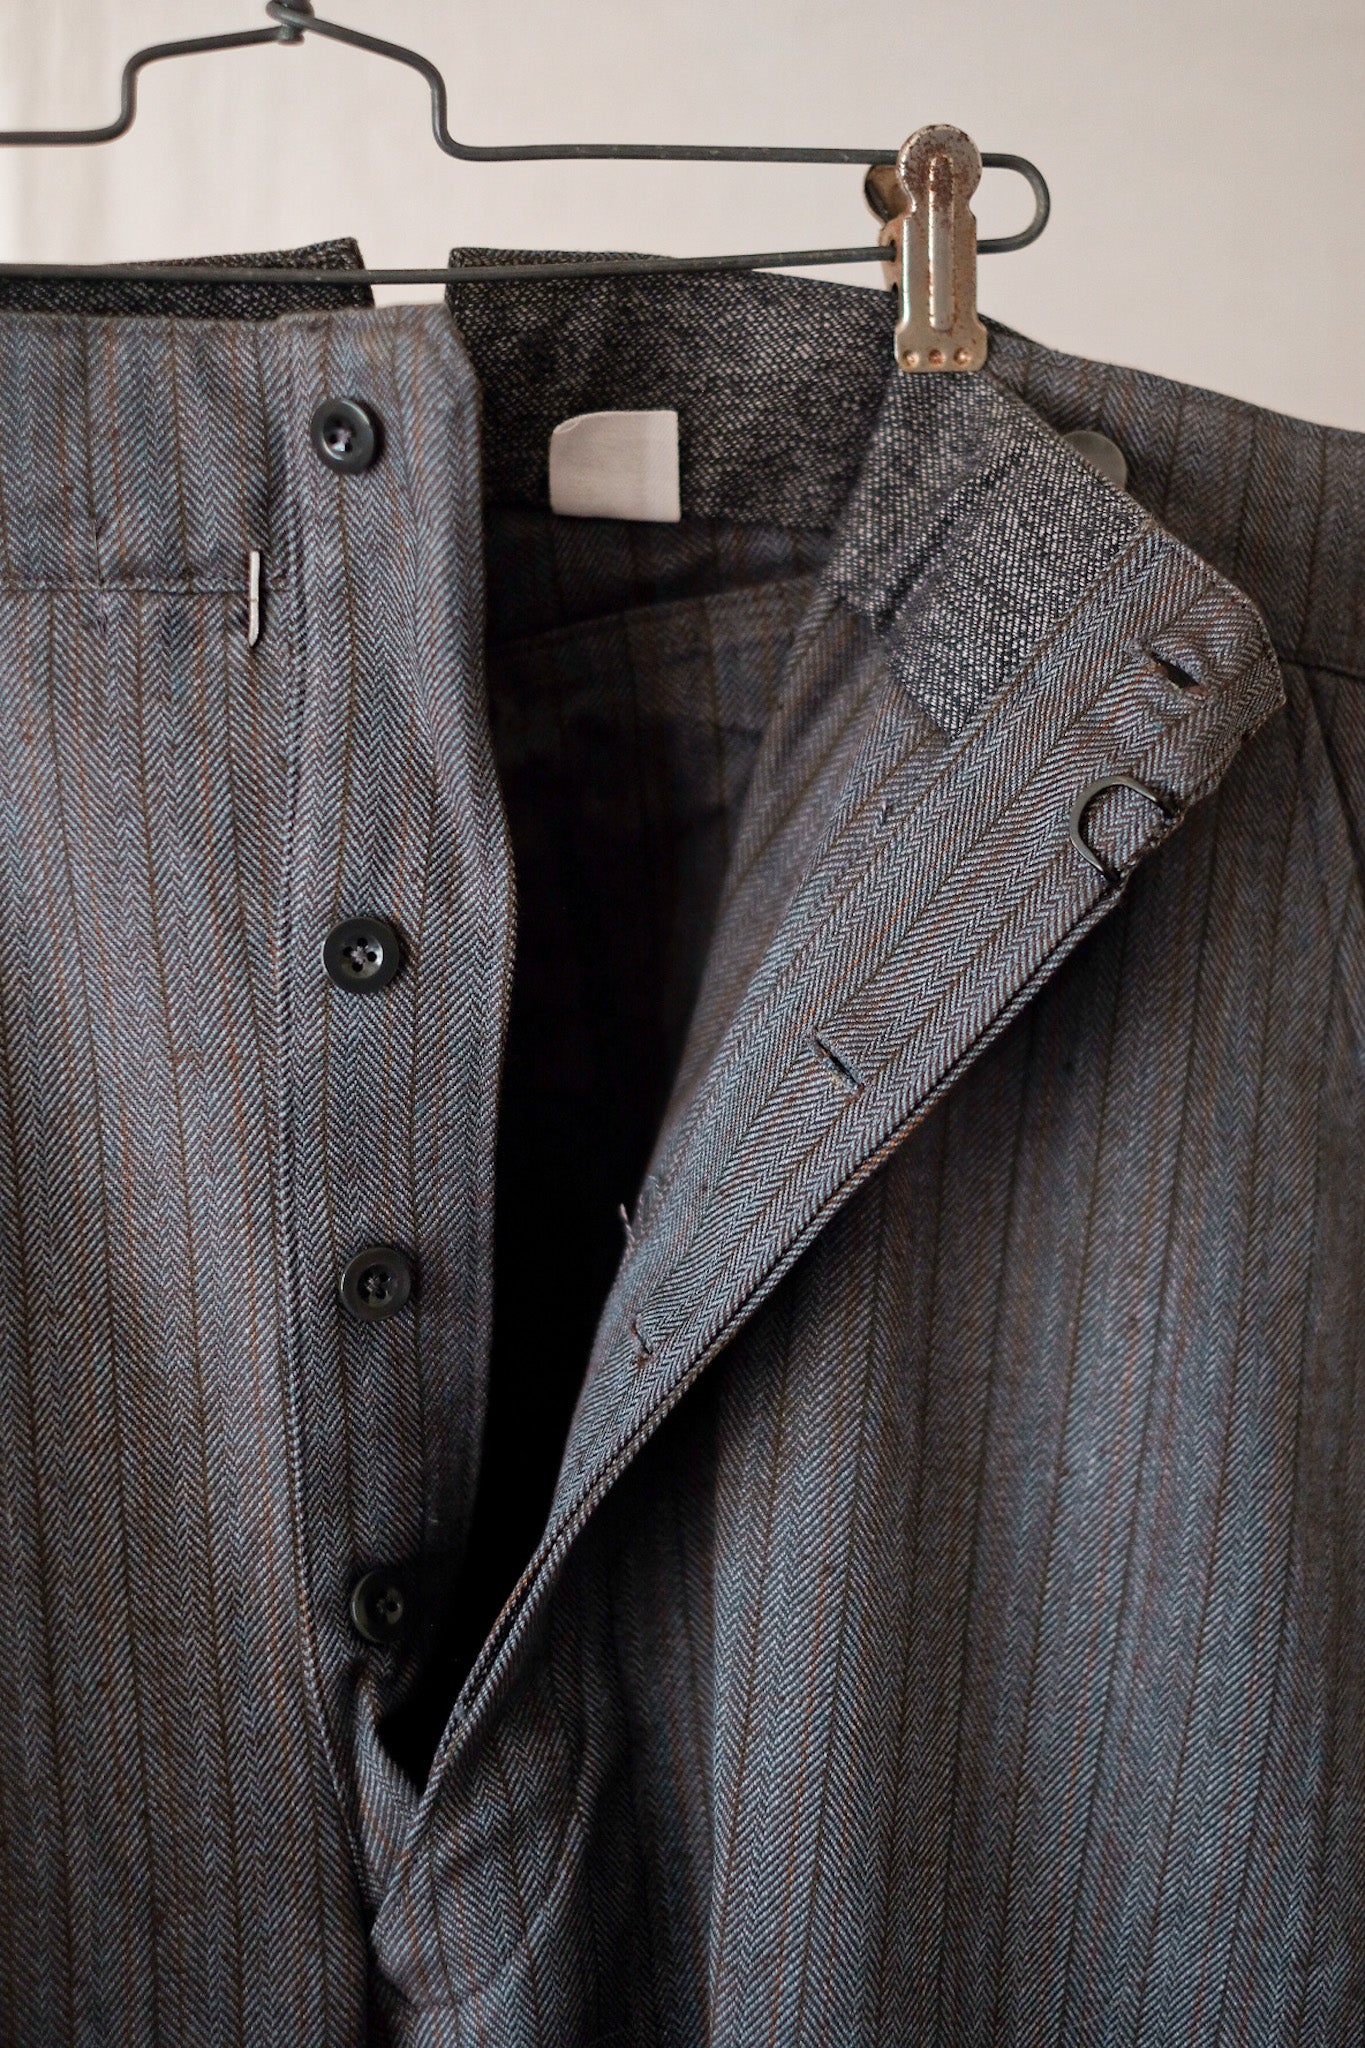 [~ 50's] French Vintage Cotton Striped HBT Work Pant "Dead Stock"